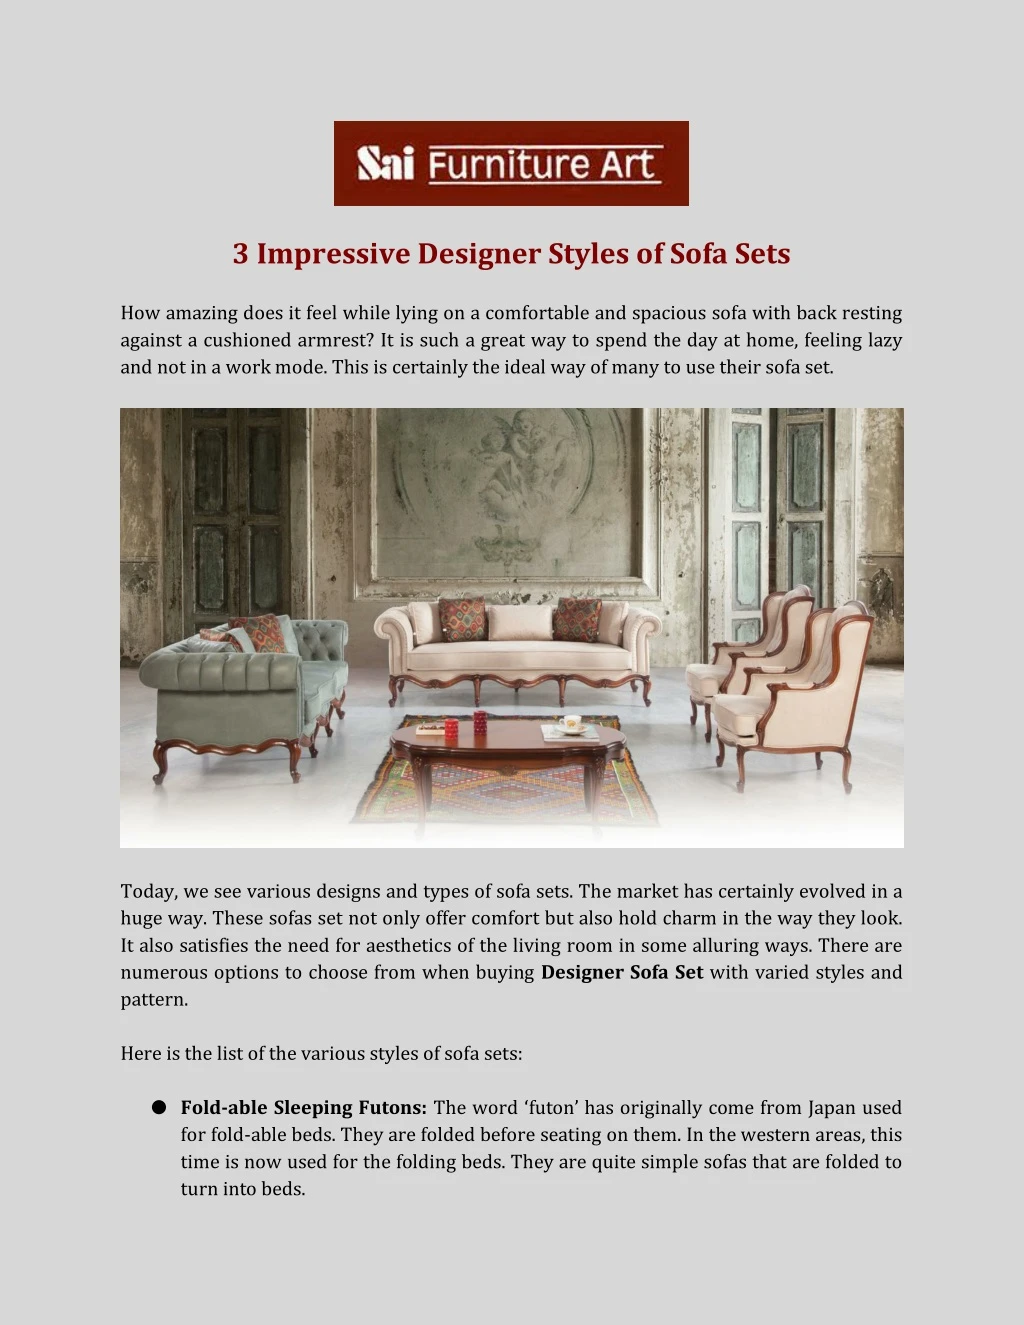 3 impressive designer styles of sofa sets